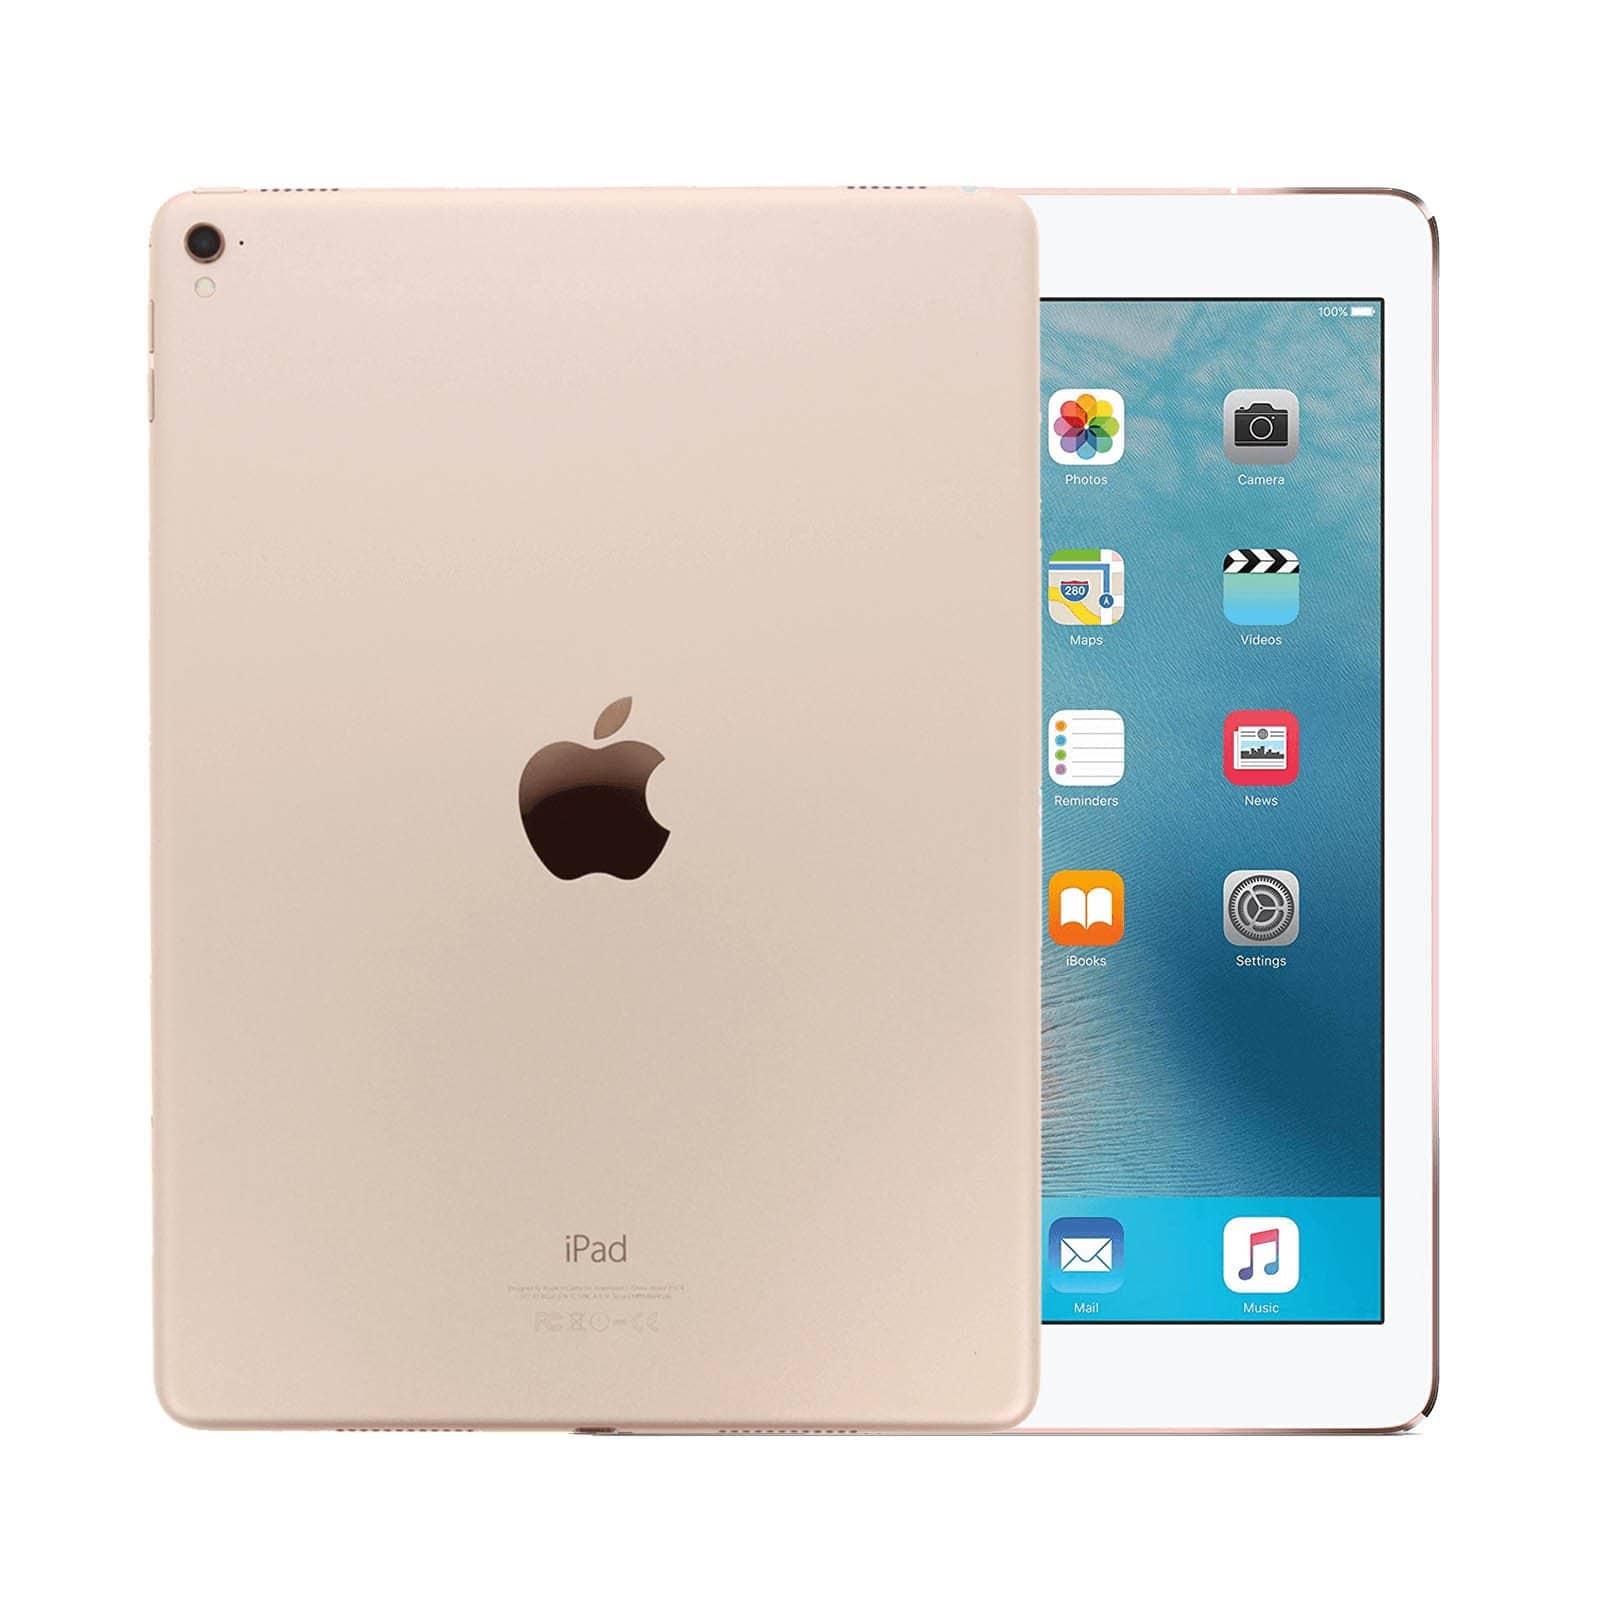 iPad Pro 9.7 Inch 32GB Gold Good - WiFi 32GB Gold Good